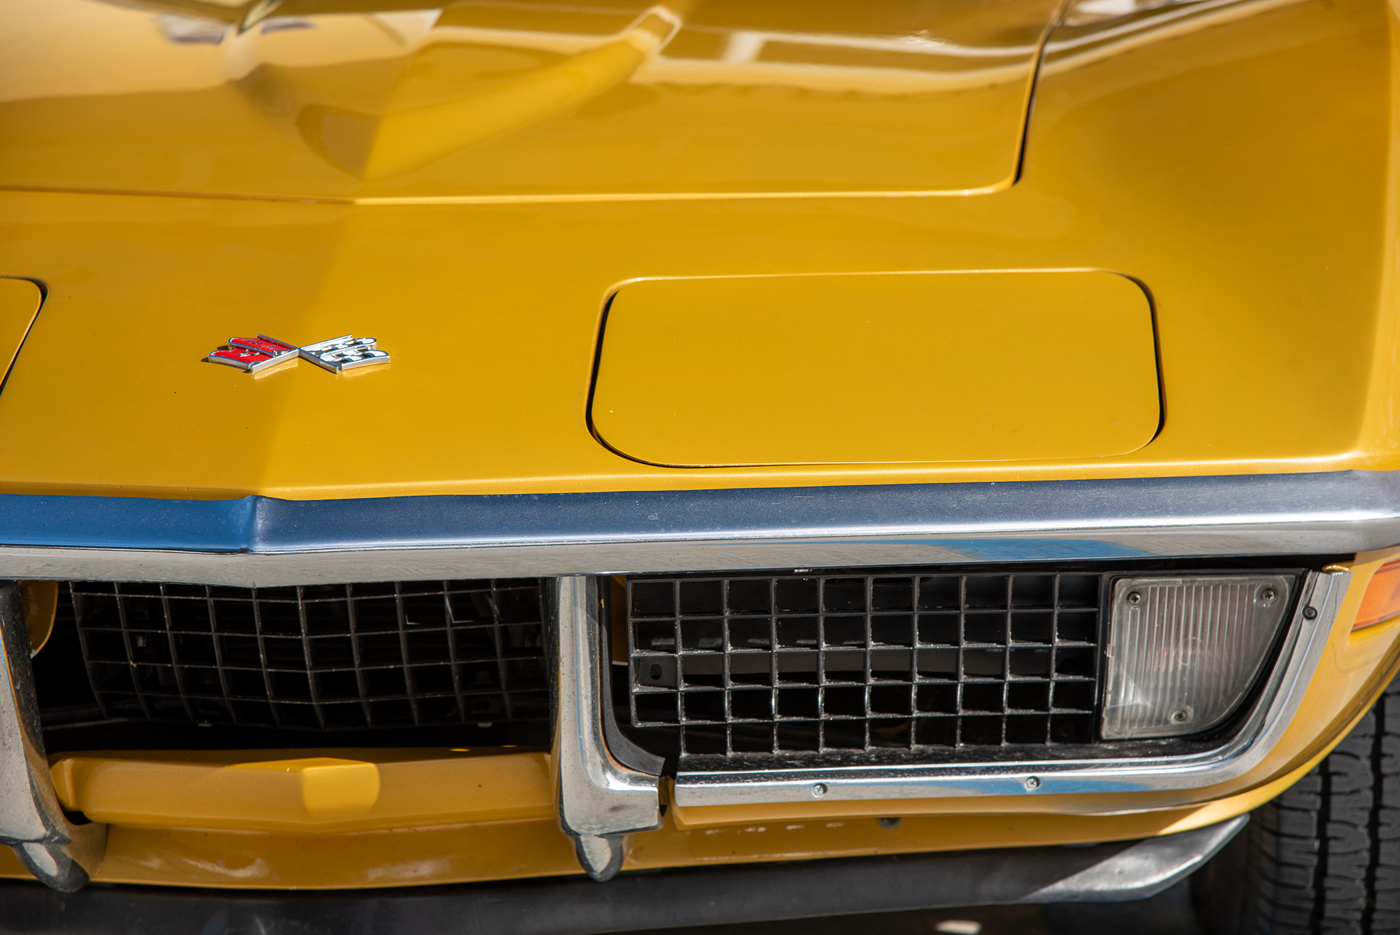 1971 Corvette Coupe in War Bonnet Yellow